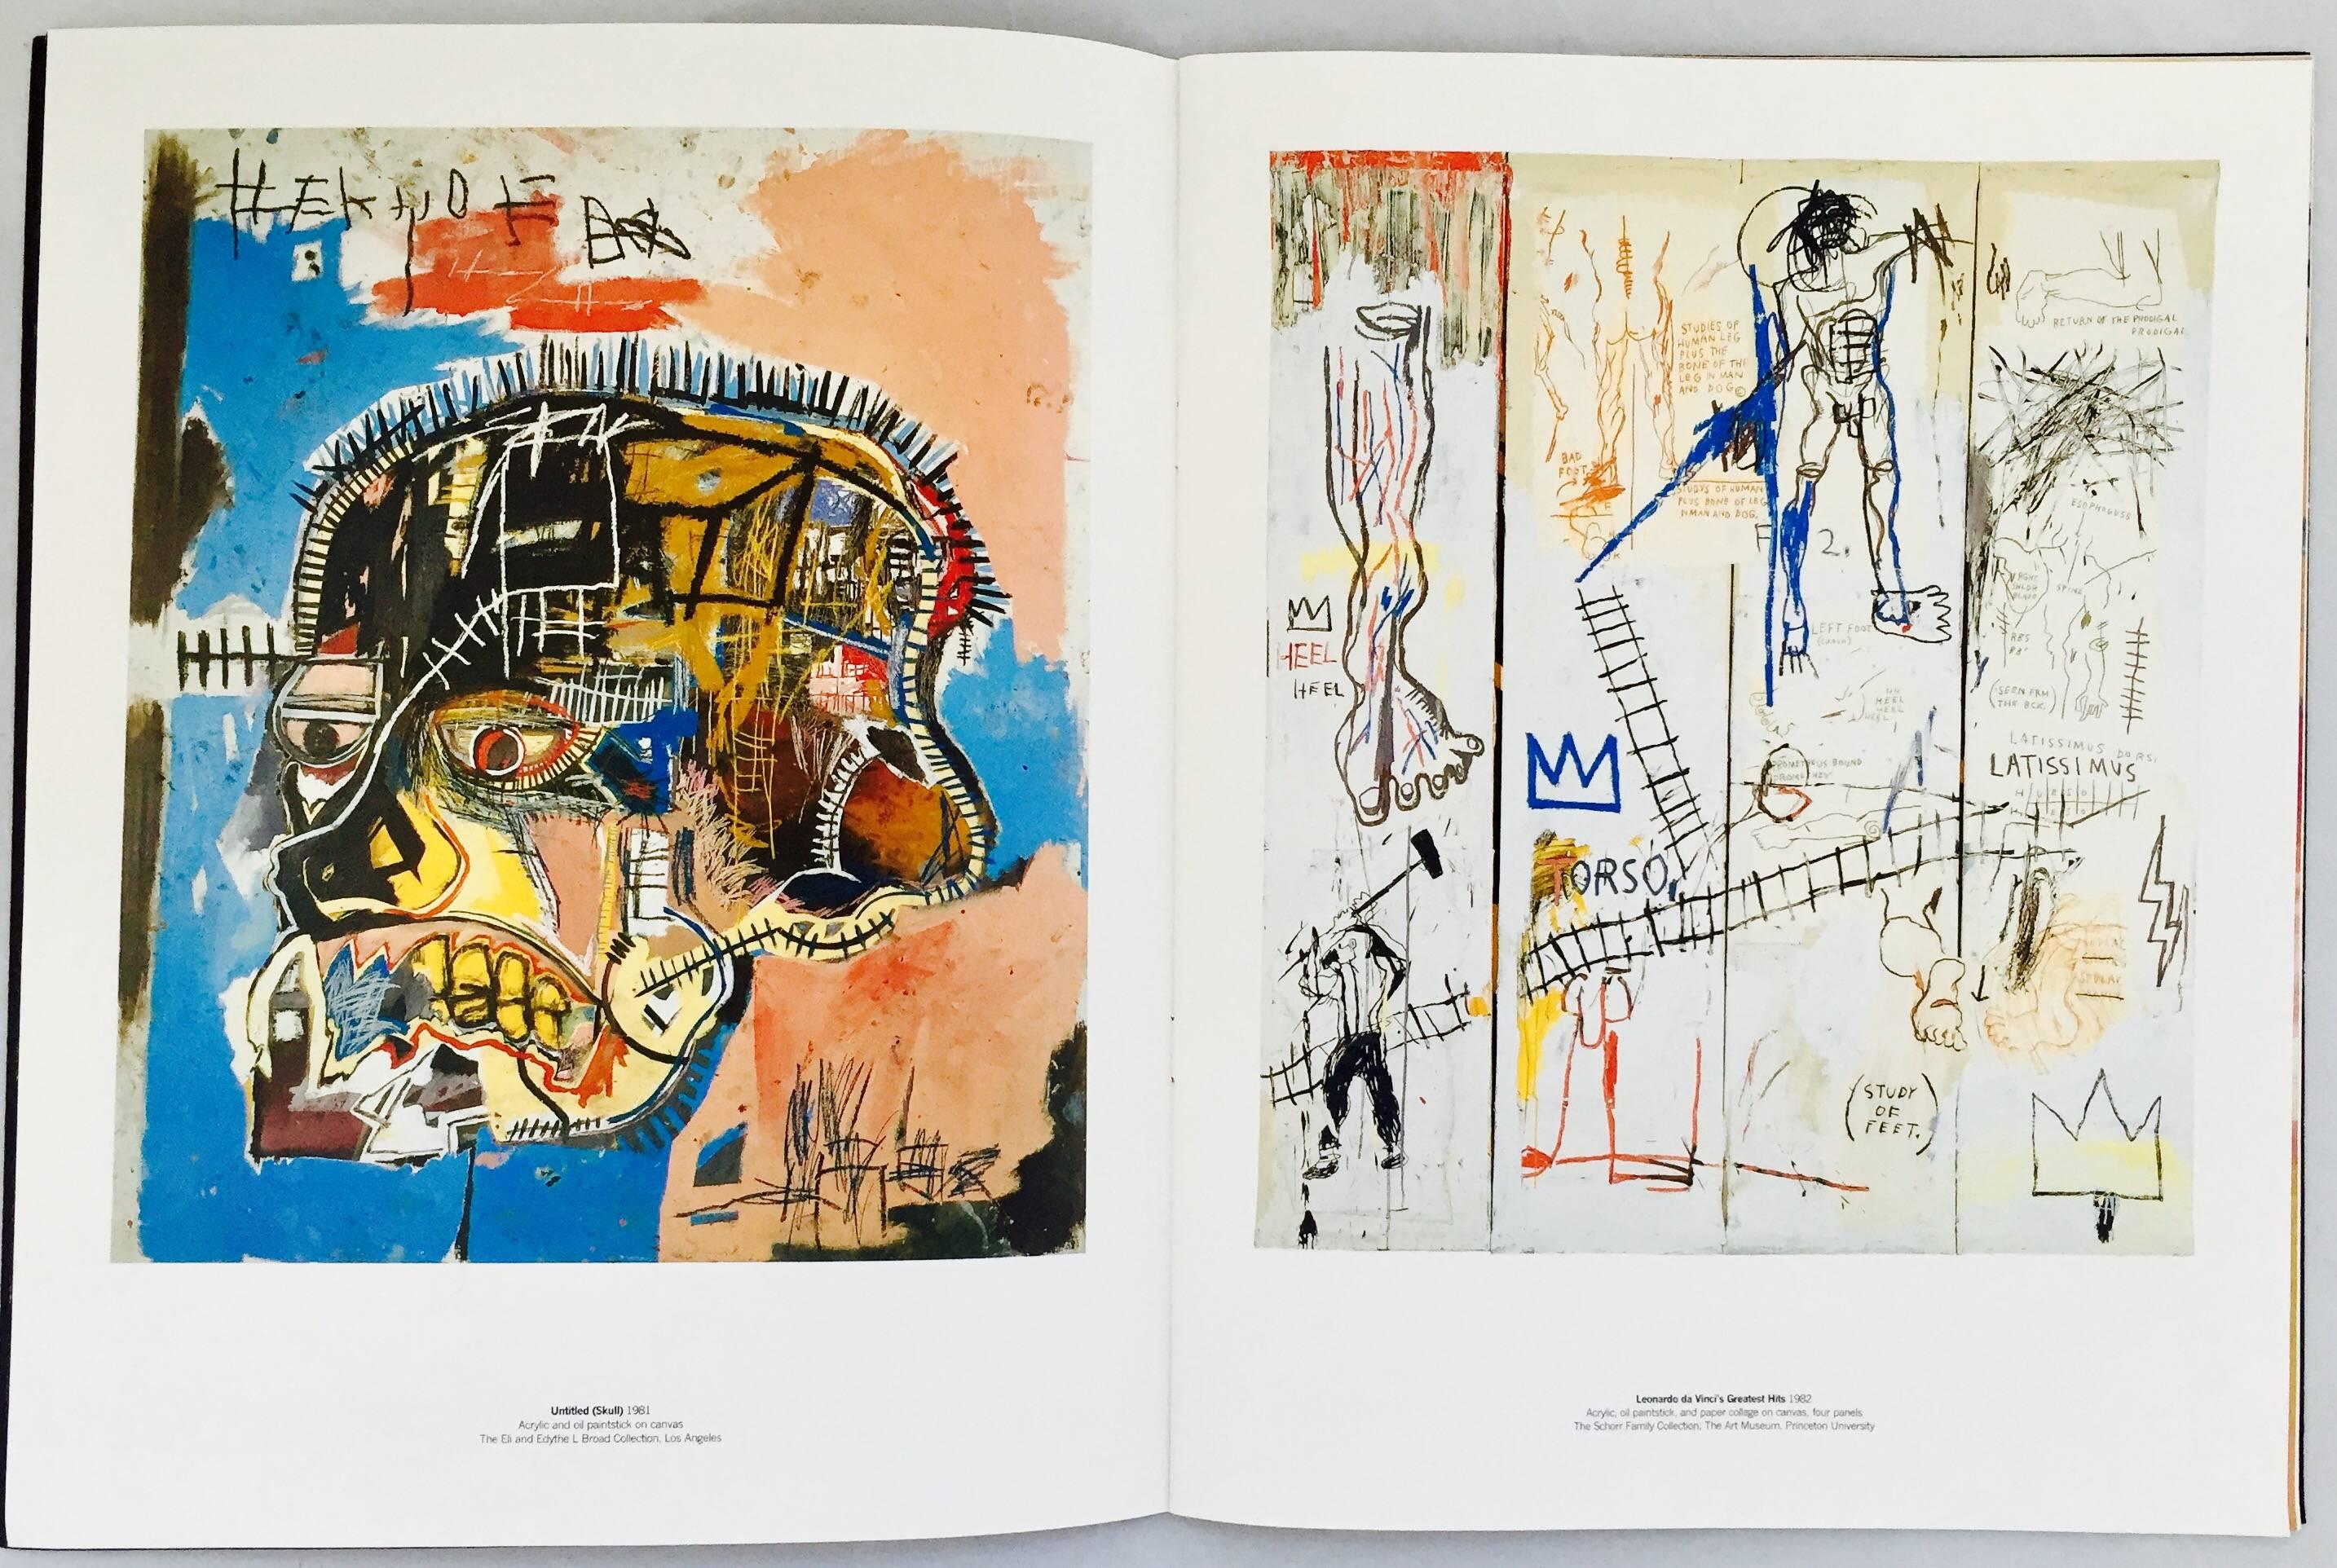 Basquiat at Serpentine Gallery, London (Exhibition Catalogue) - Pop Art Print by after Jean-Michel Basquiat